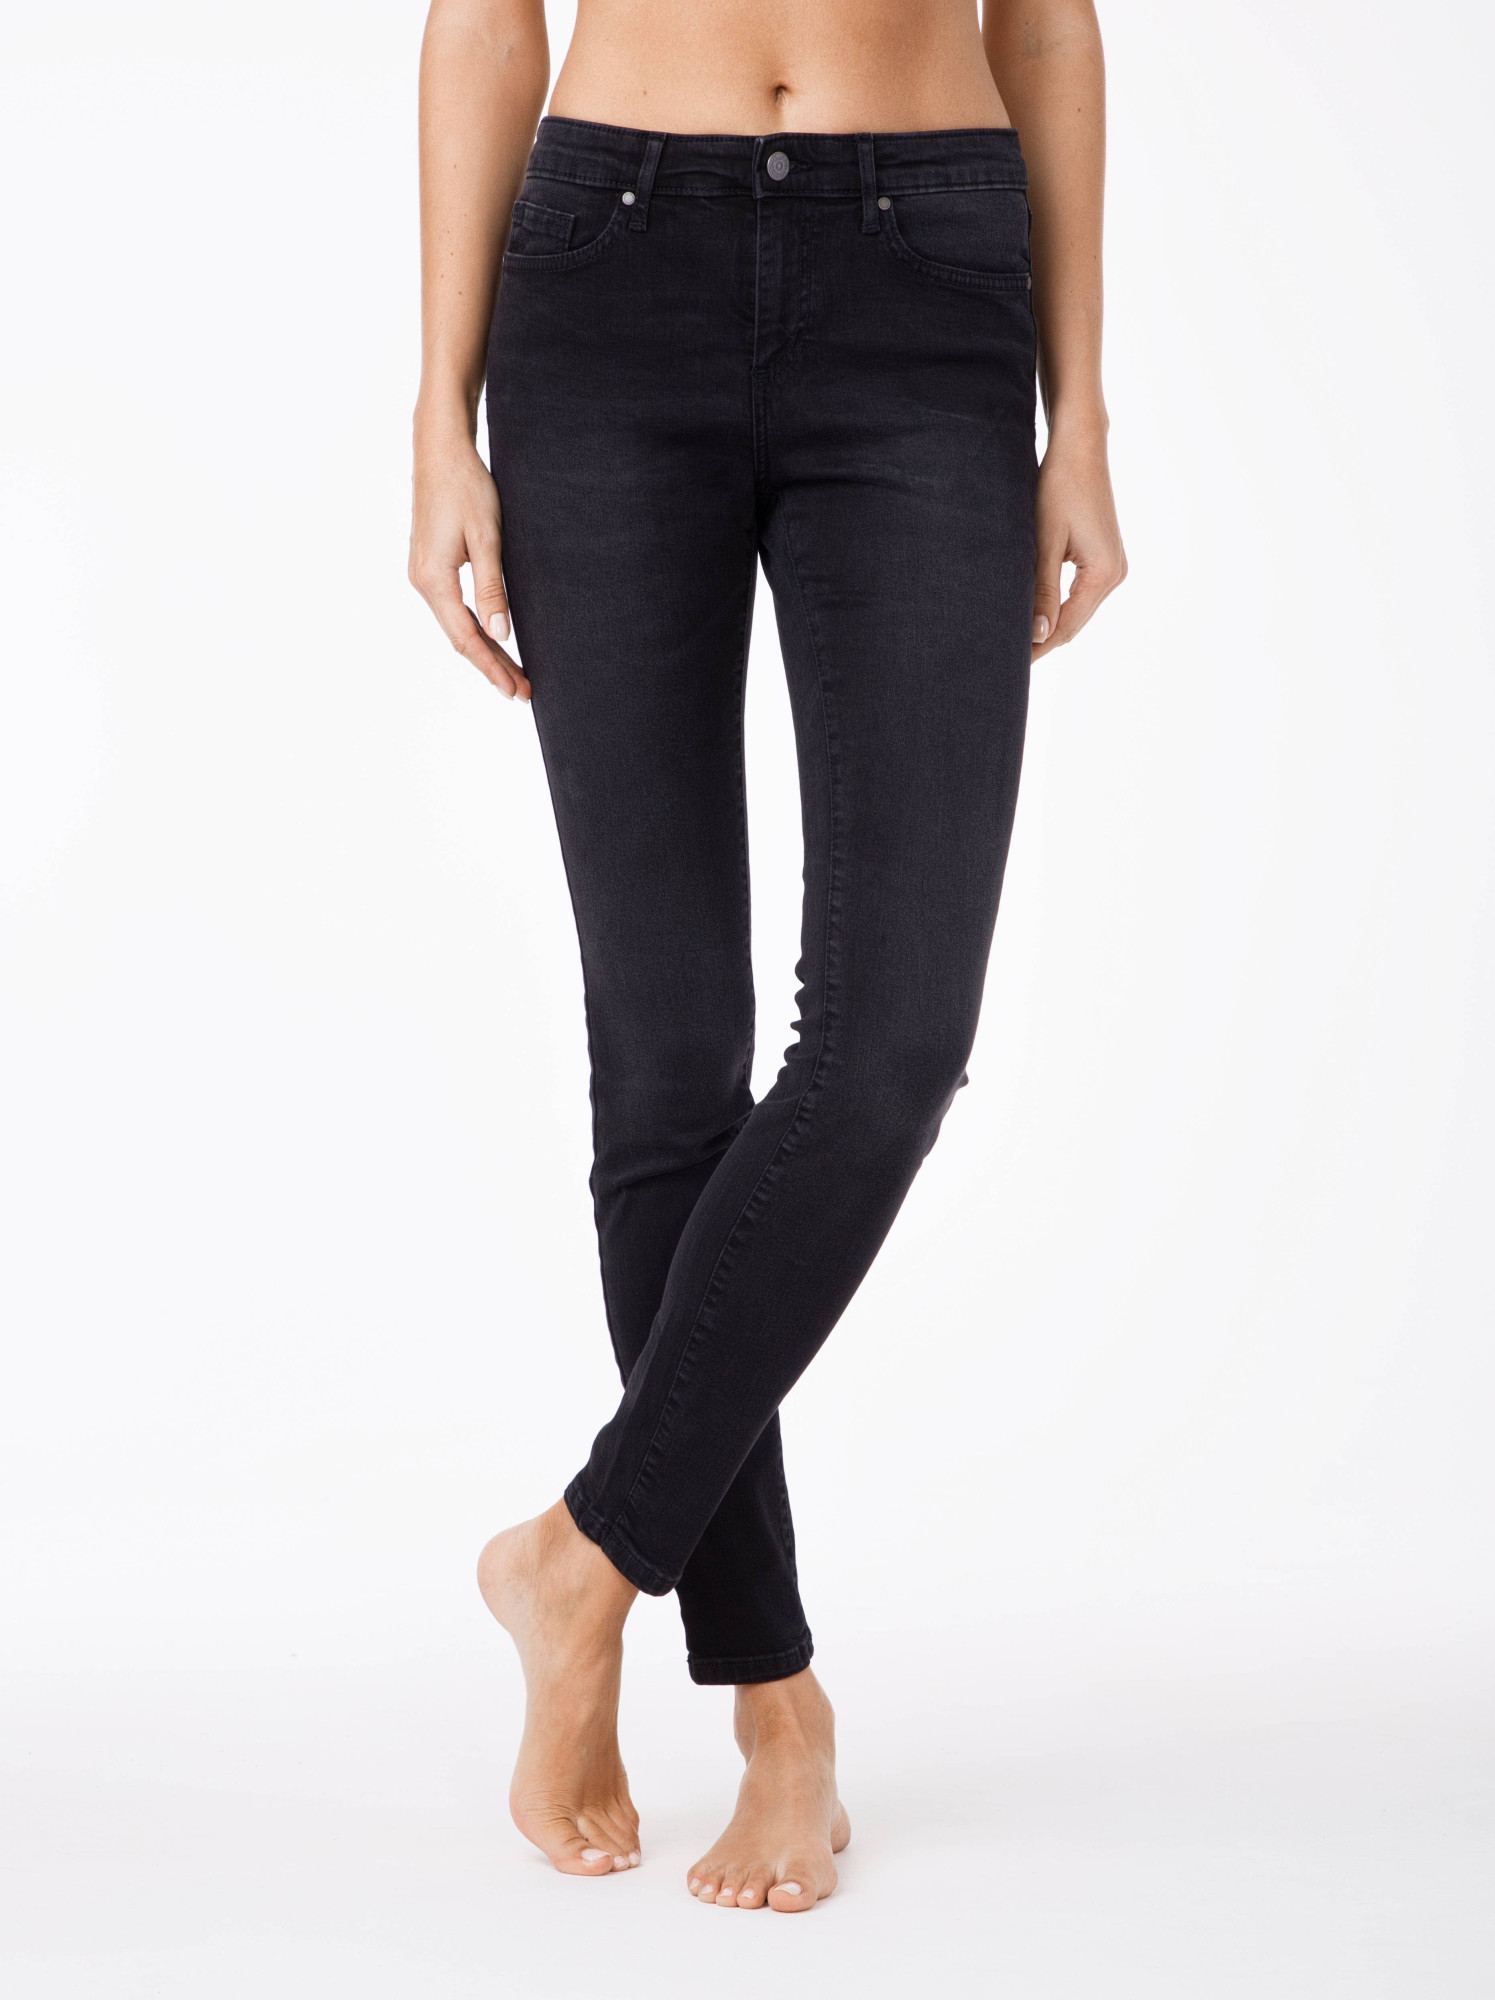 CONTE Jeans Black 170-106/XL